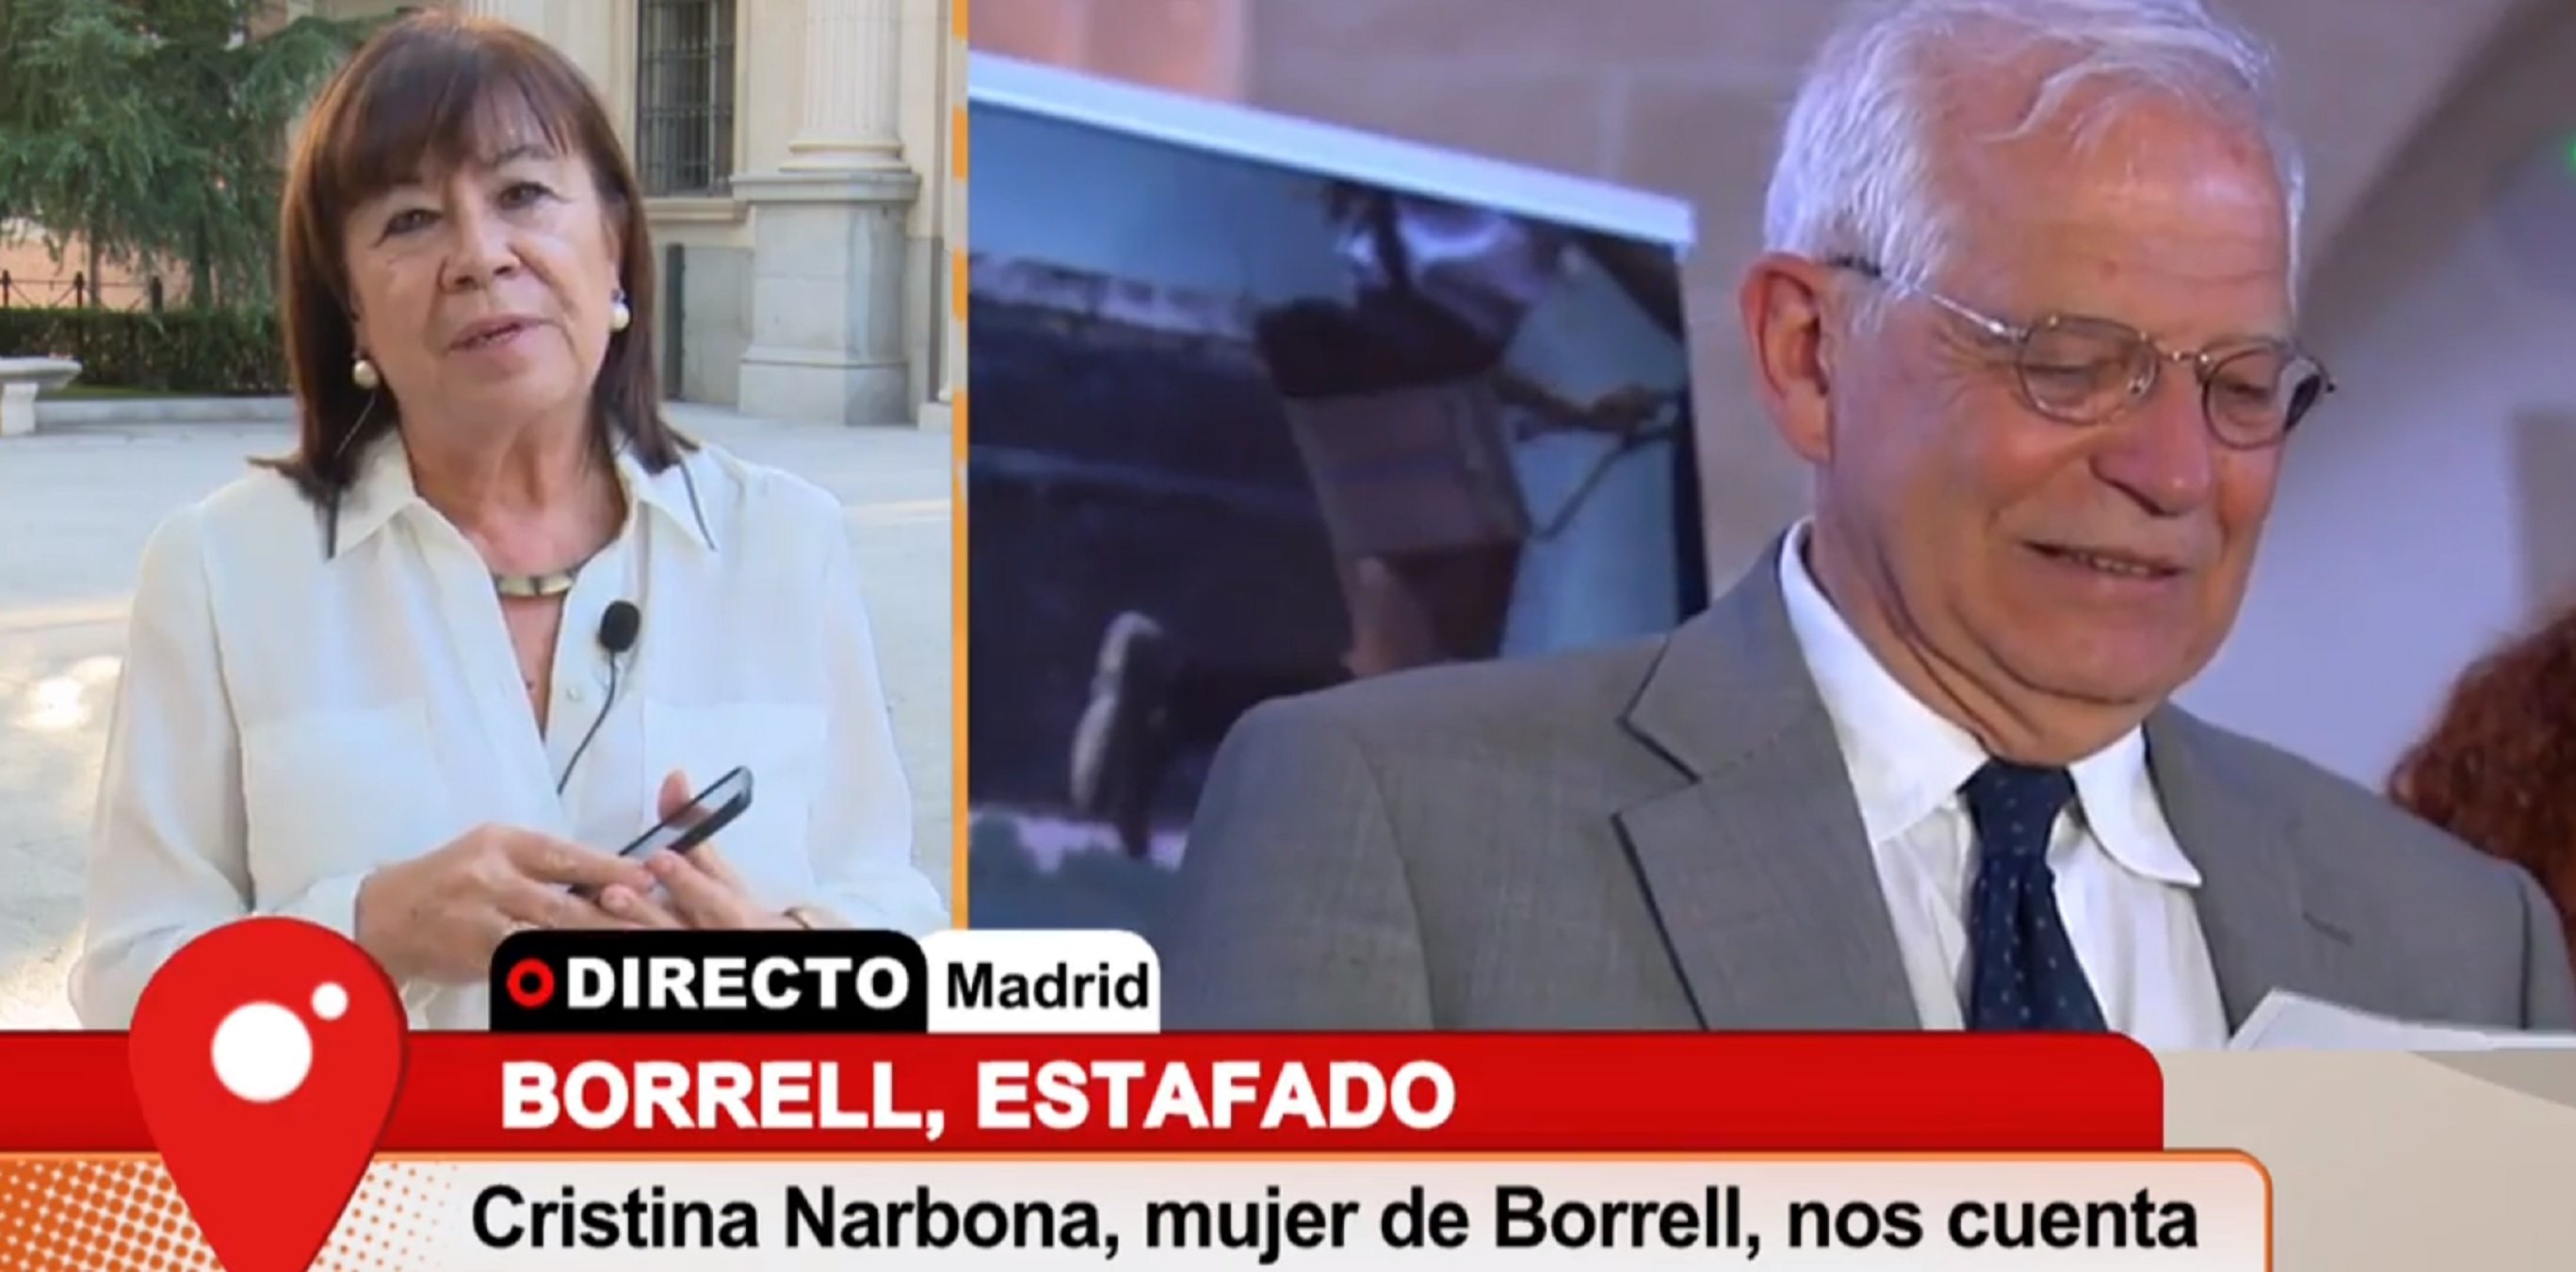 Machismo en Telecinco, rotulan el cargo de Cristina Narbona: "mujer de Borrell"